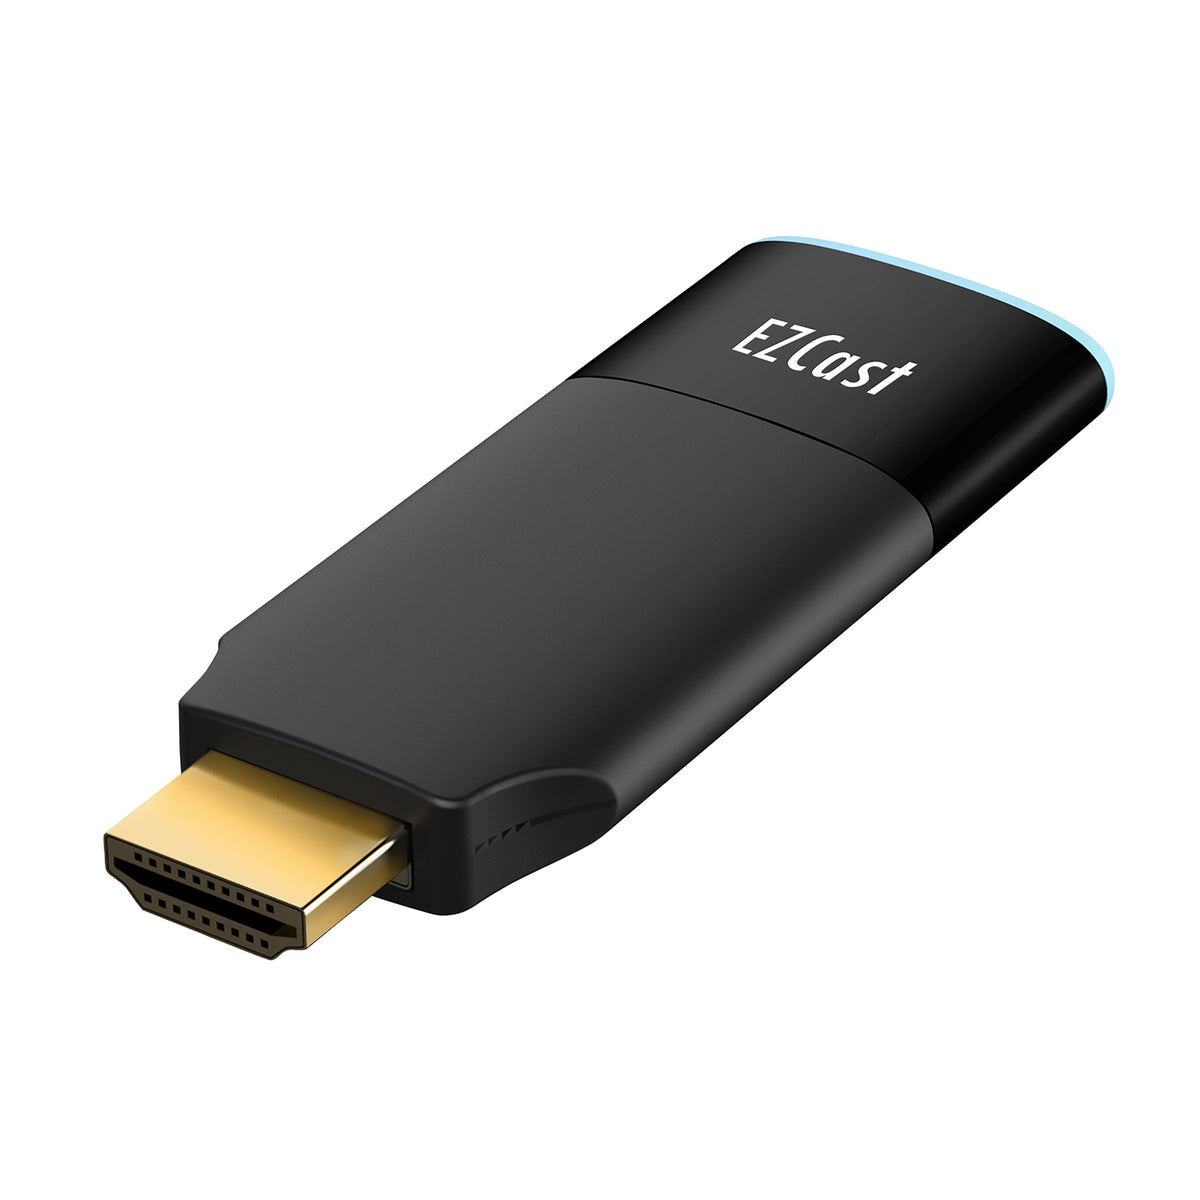 EzCast 2 Streaming, 4K/30p, HDMI, reproductor de multimedia, WiFi, Youtube, negro - Multimax